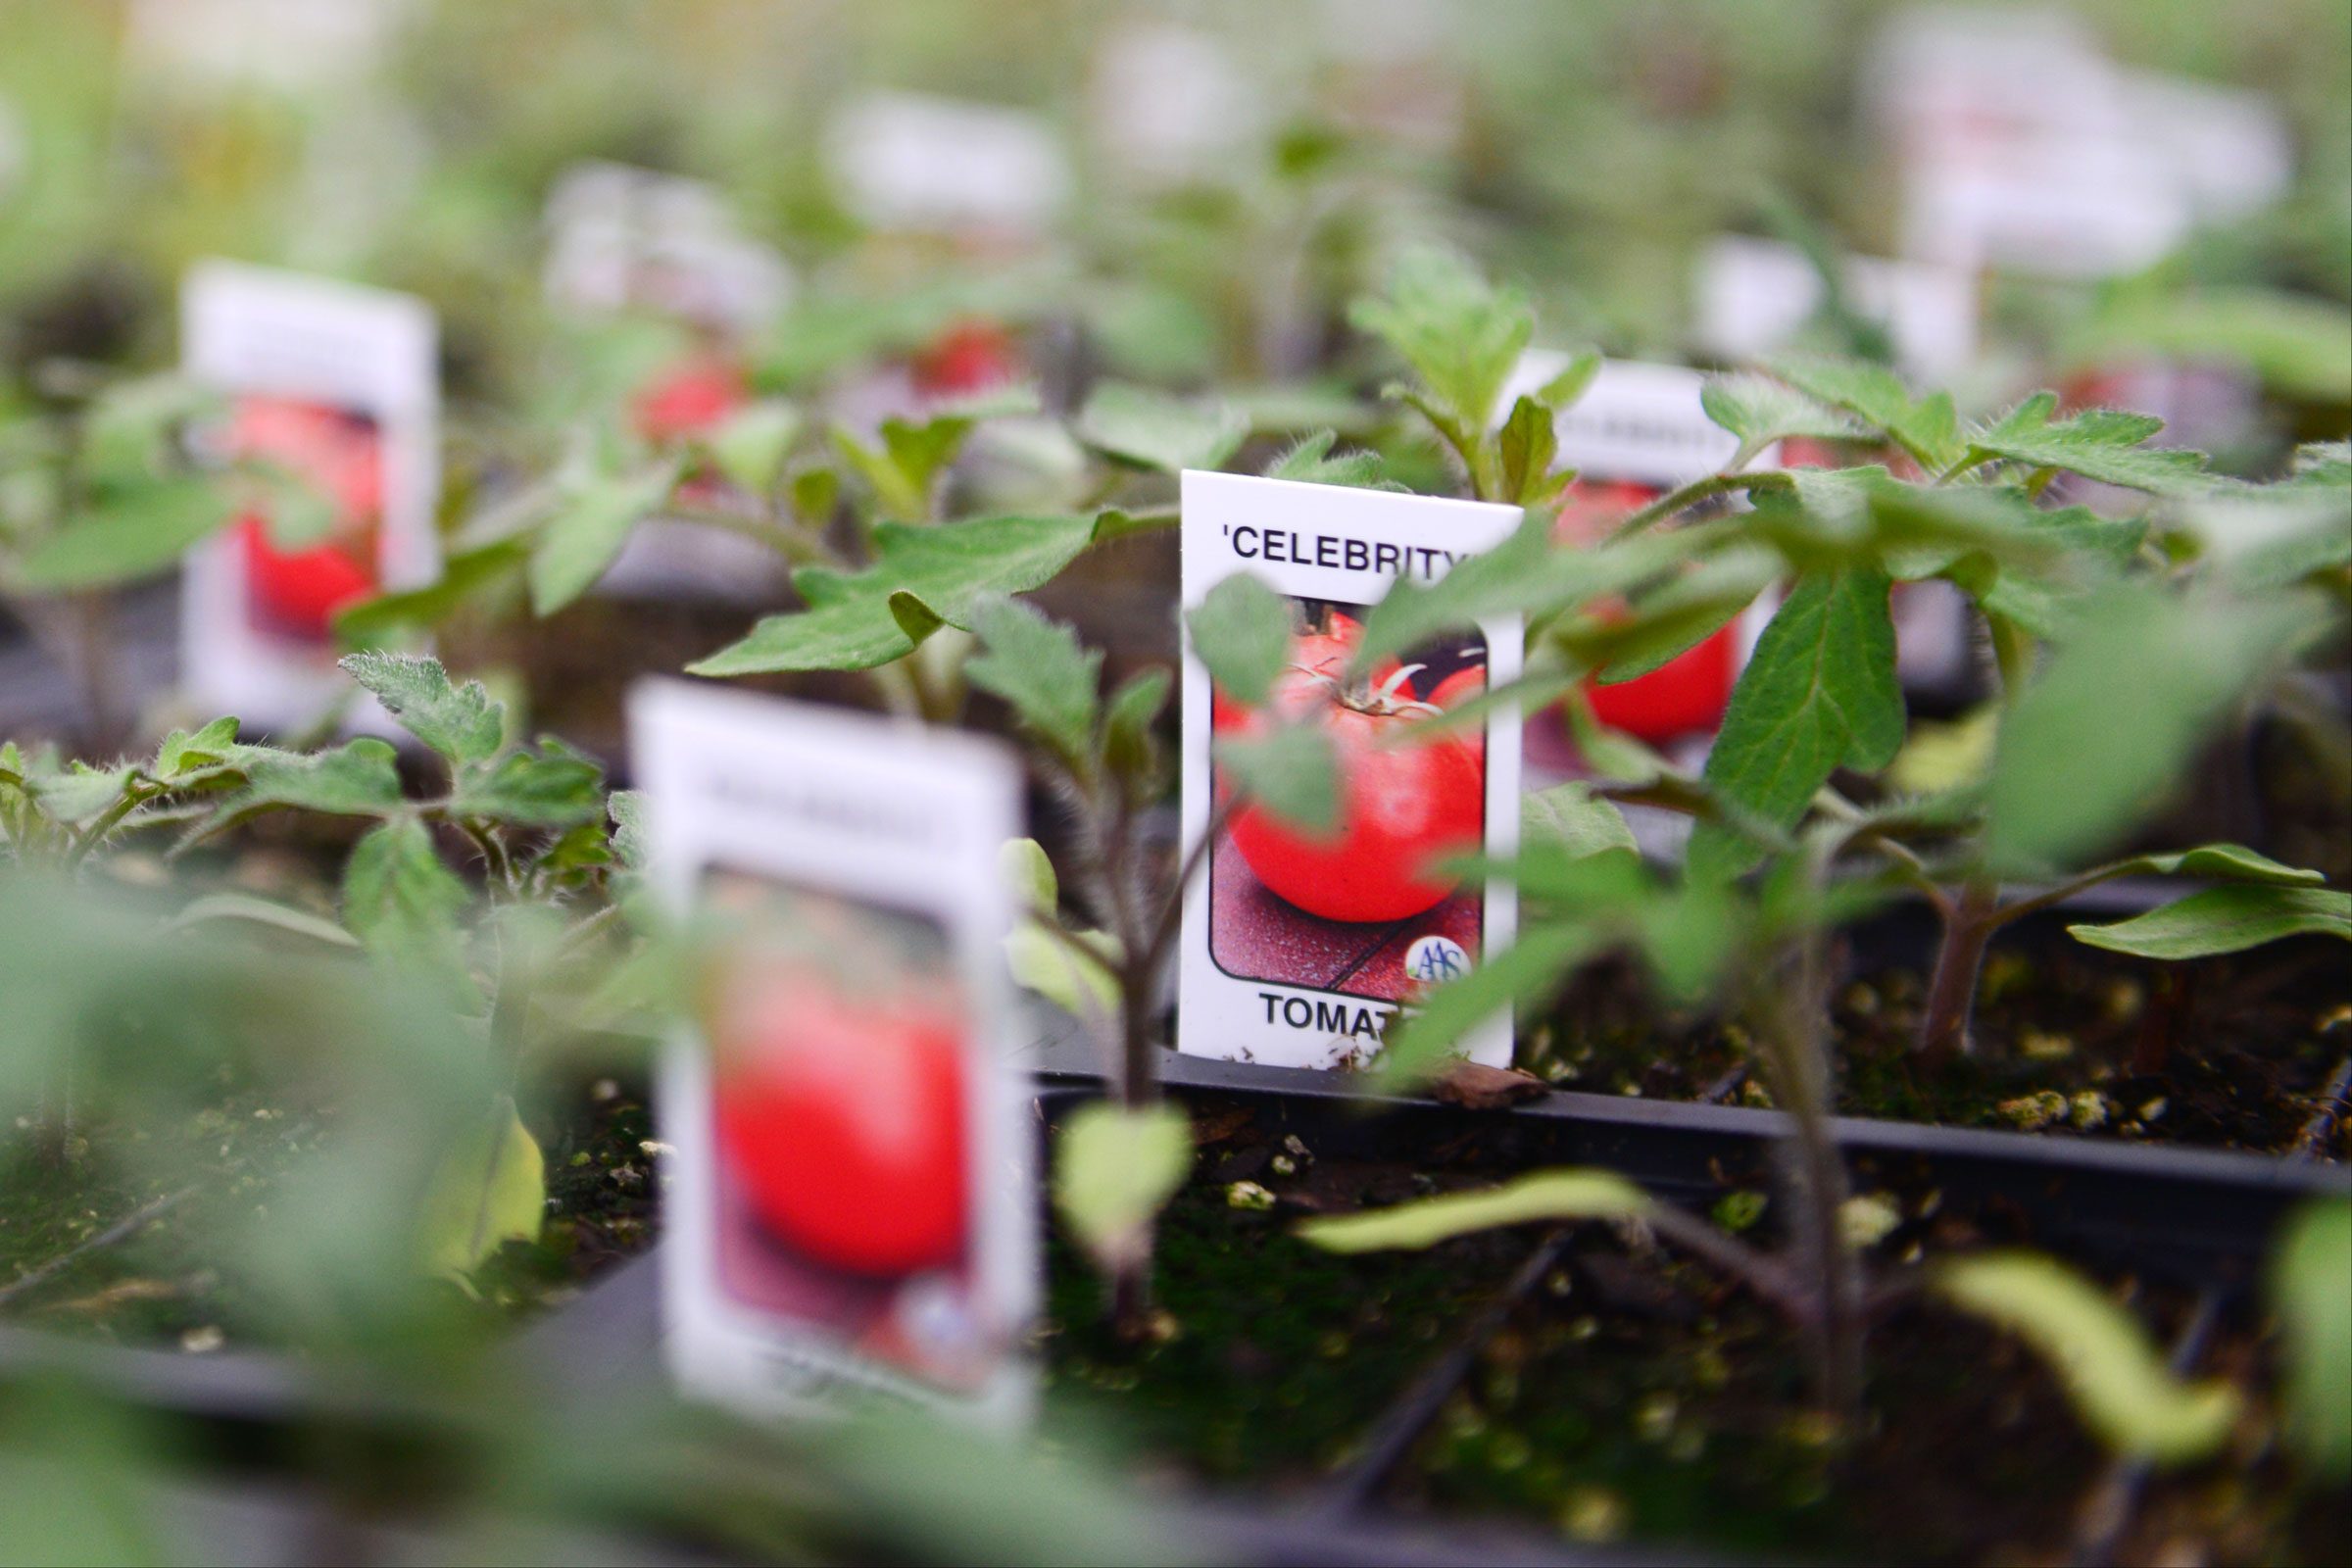 celebrity tomato tag in a tomato plant at a greenhouse